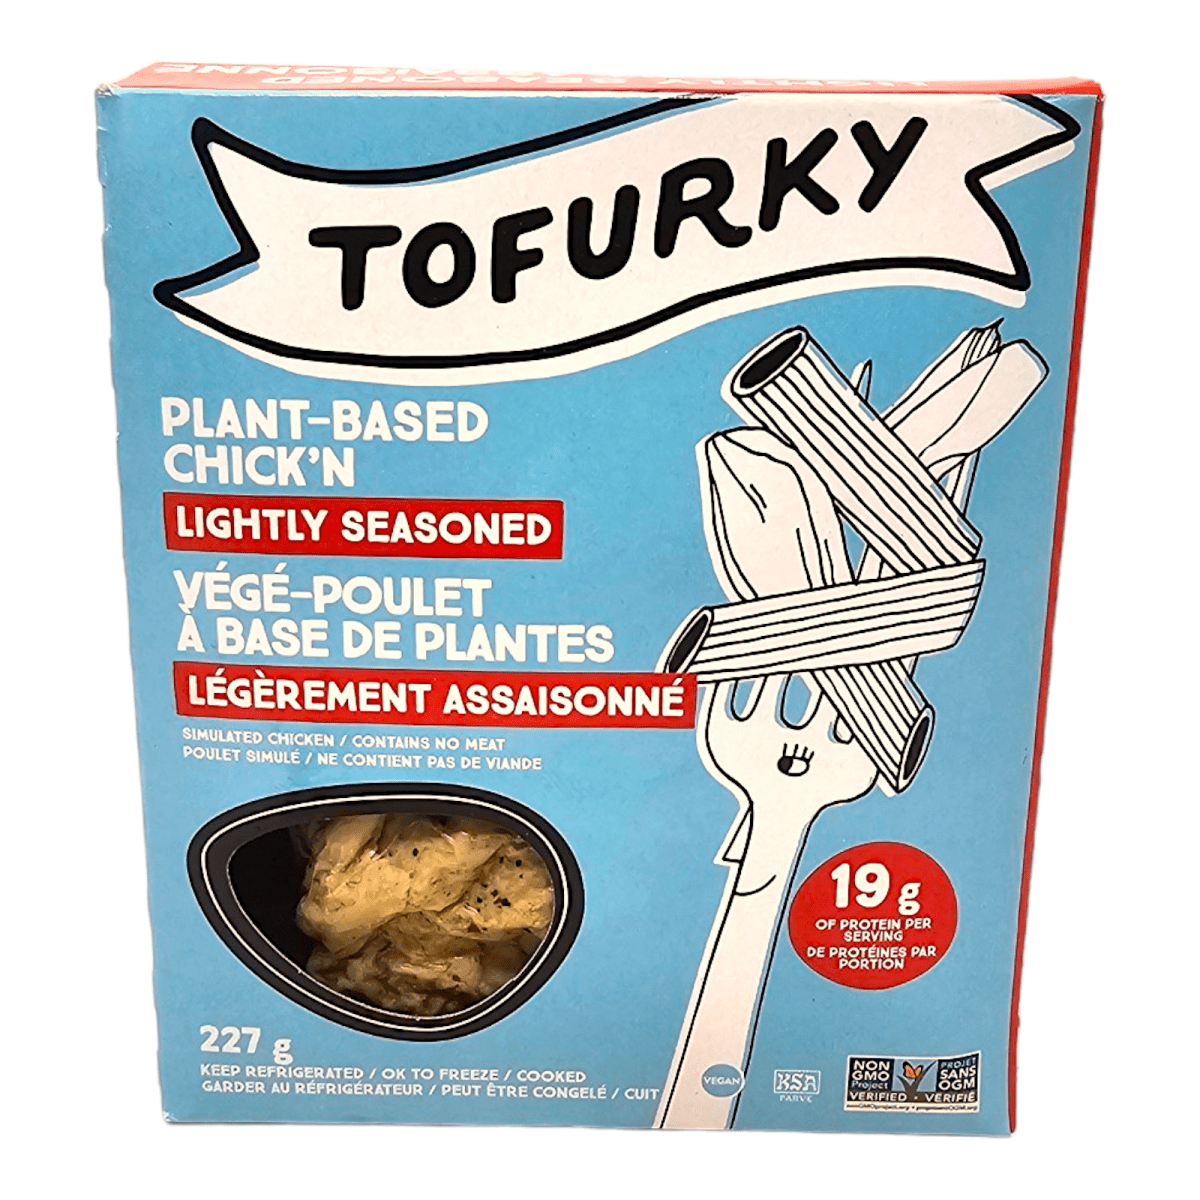 Tofurky Plant-Based Chick’n Lightly Seasoned (227g)